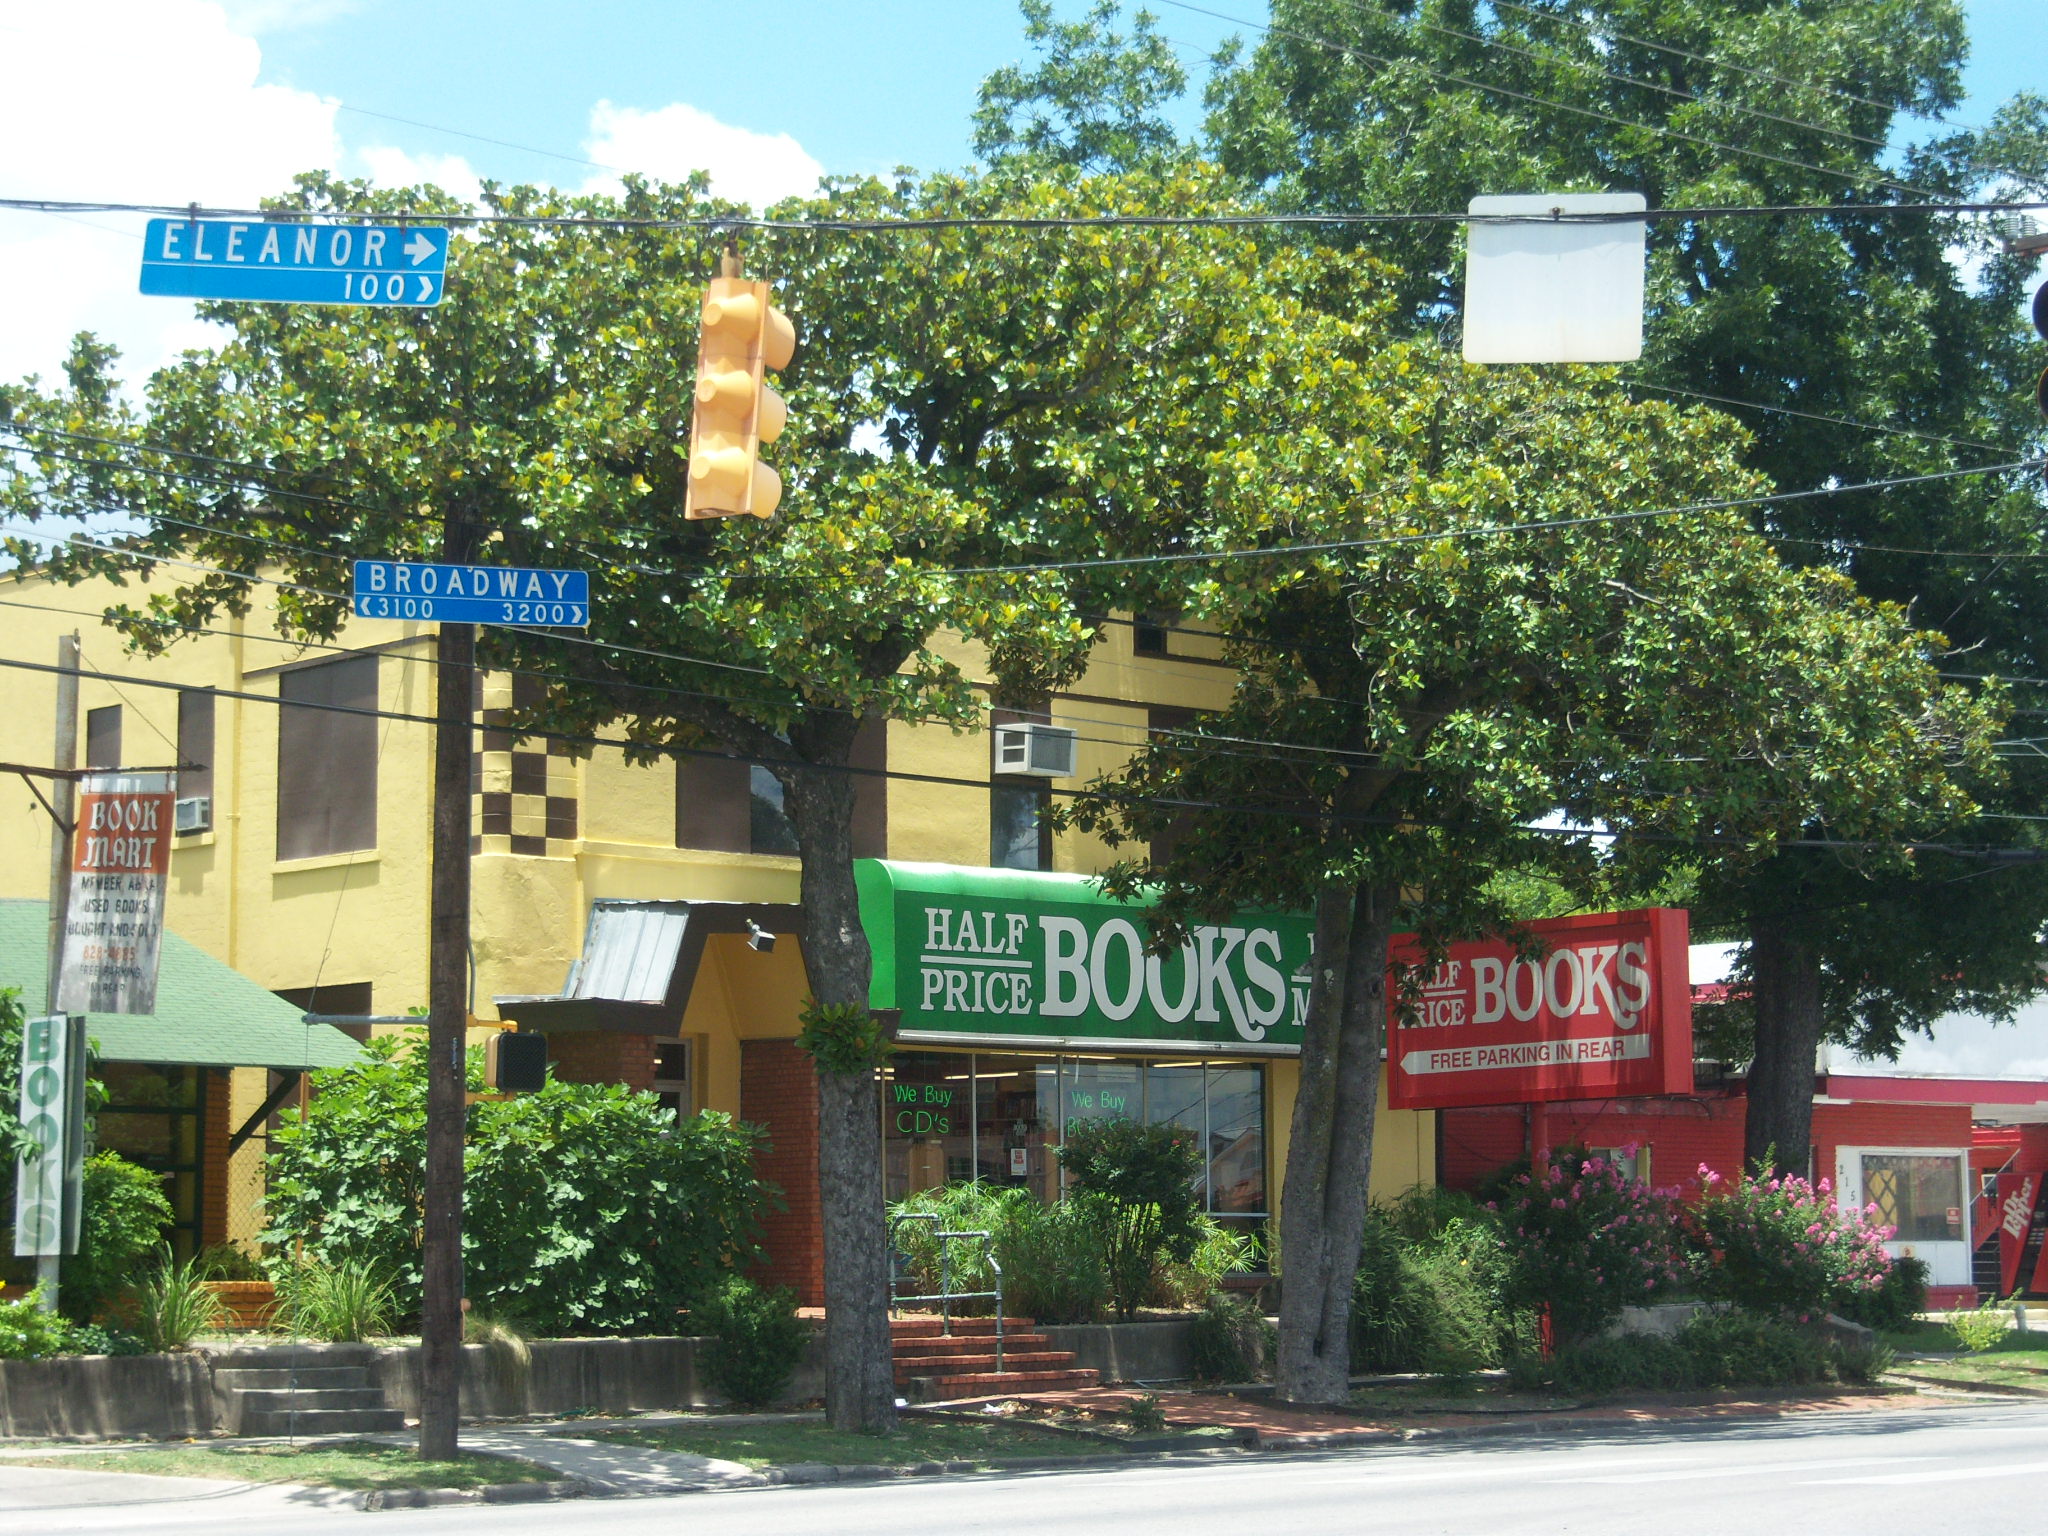 Photo of the Half Price Books on Broadway at Eleanor in San Antonio, Texas.